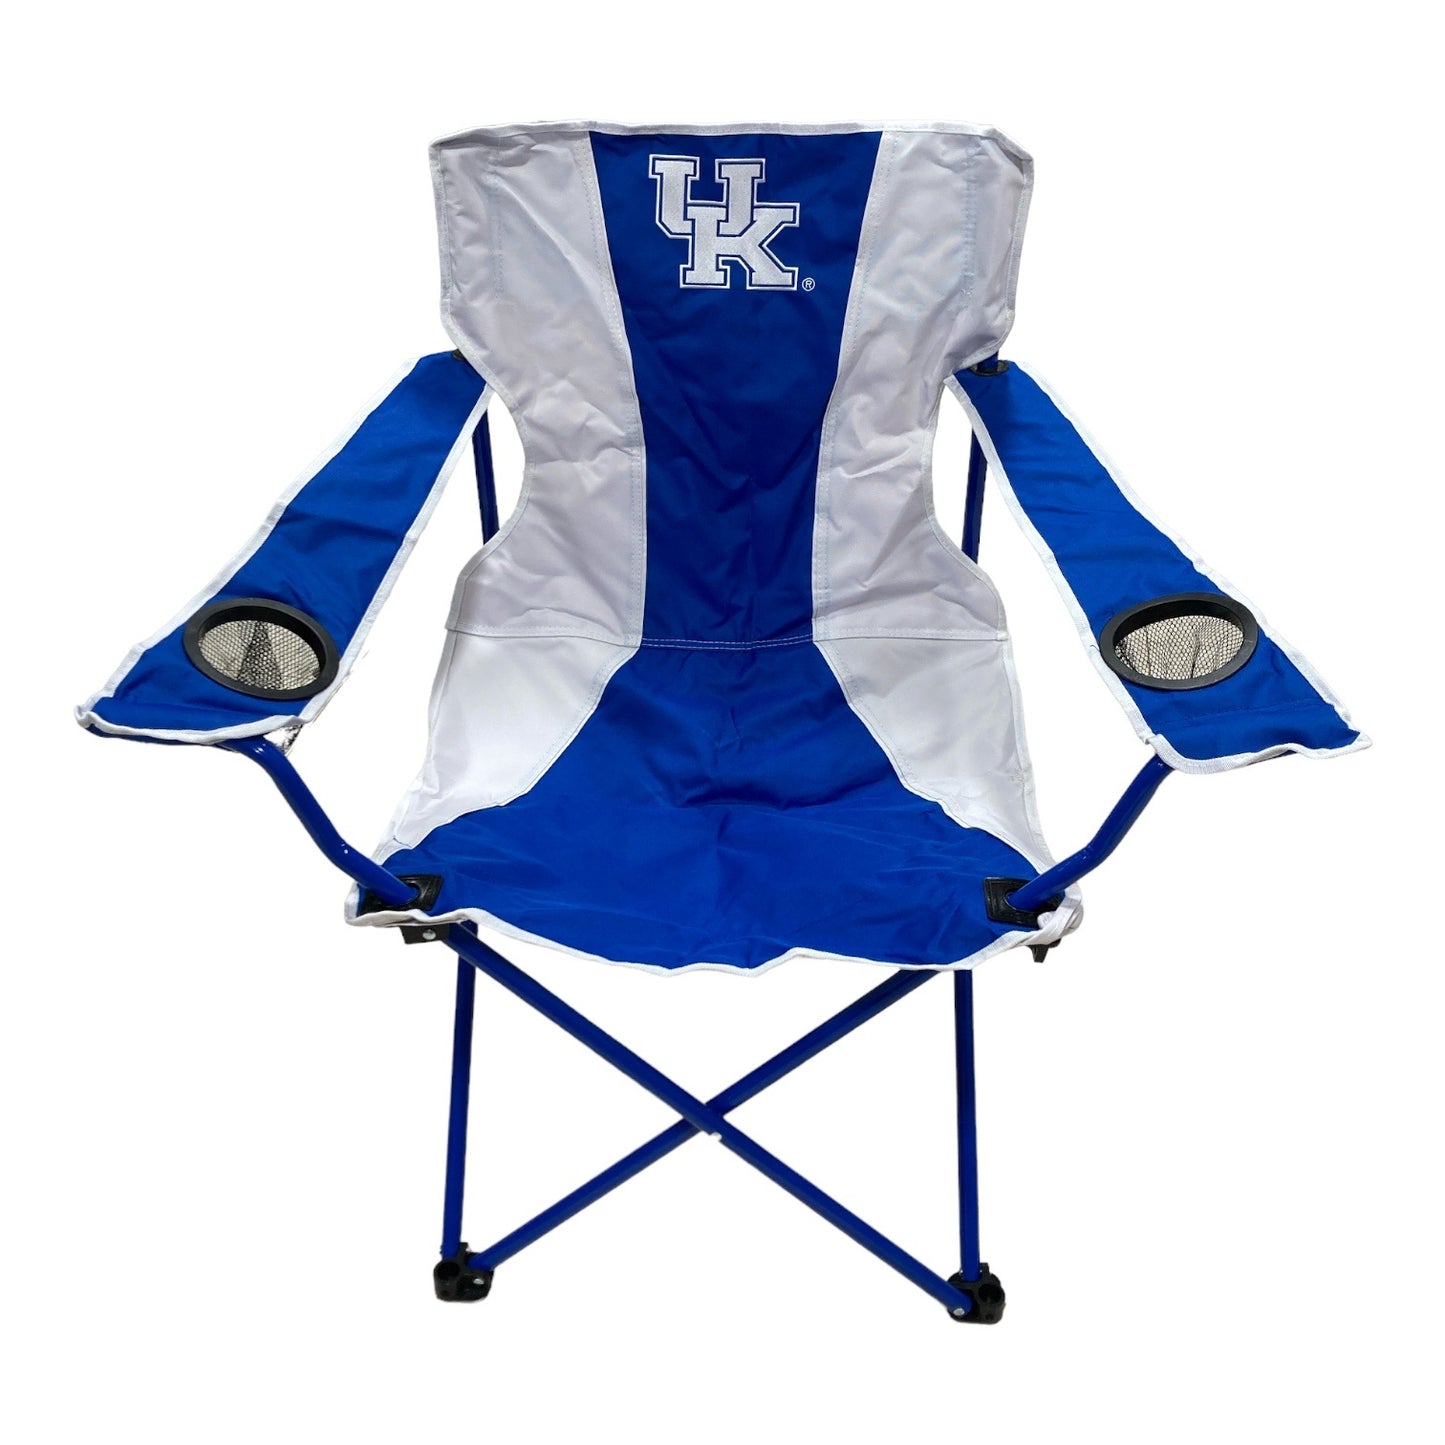 Logo Brands Officially Licensed NCAA Big Boy Chair, Kentucky Wildcats